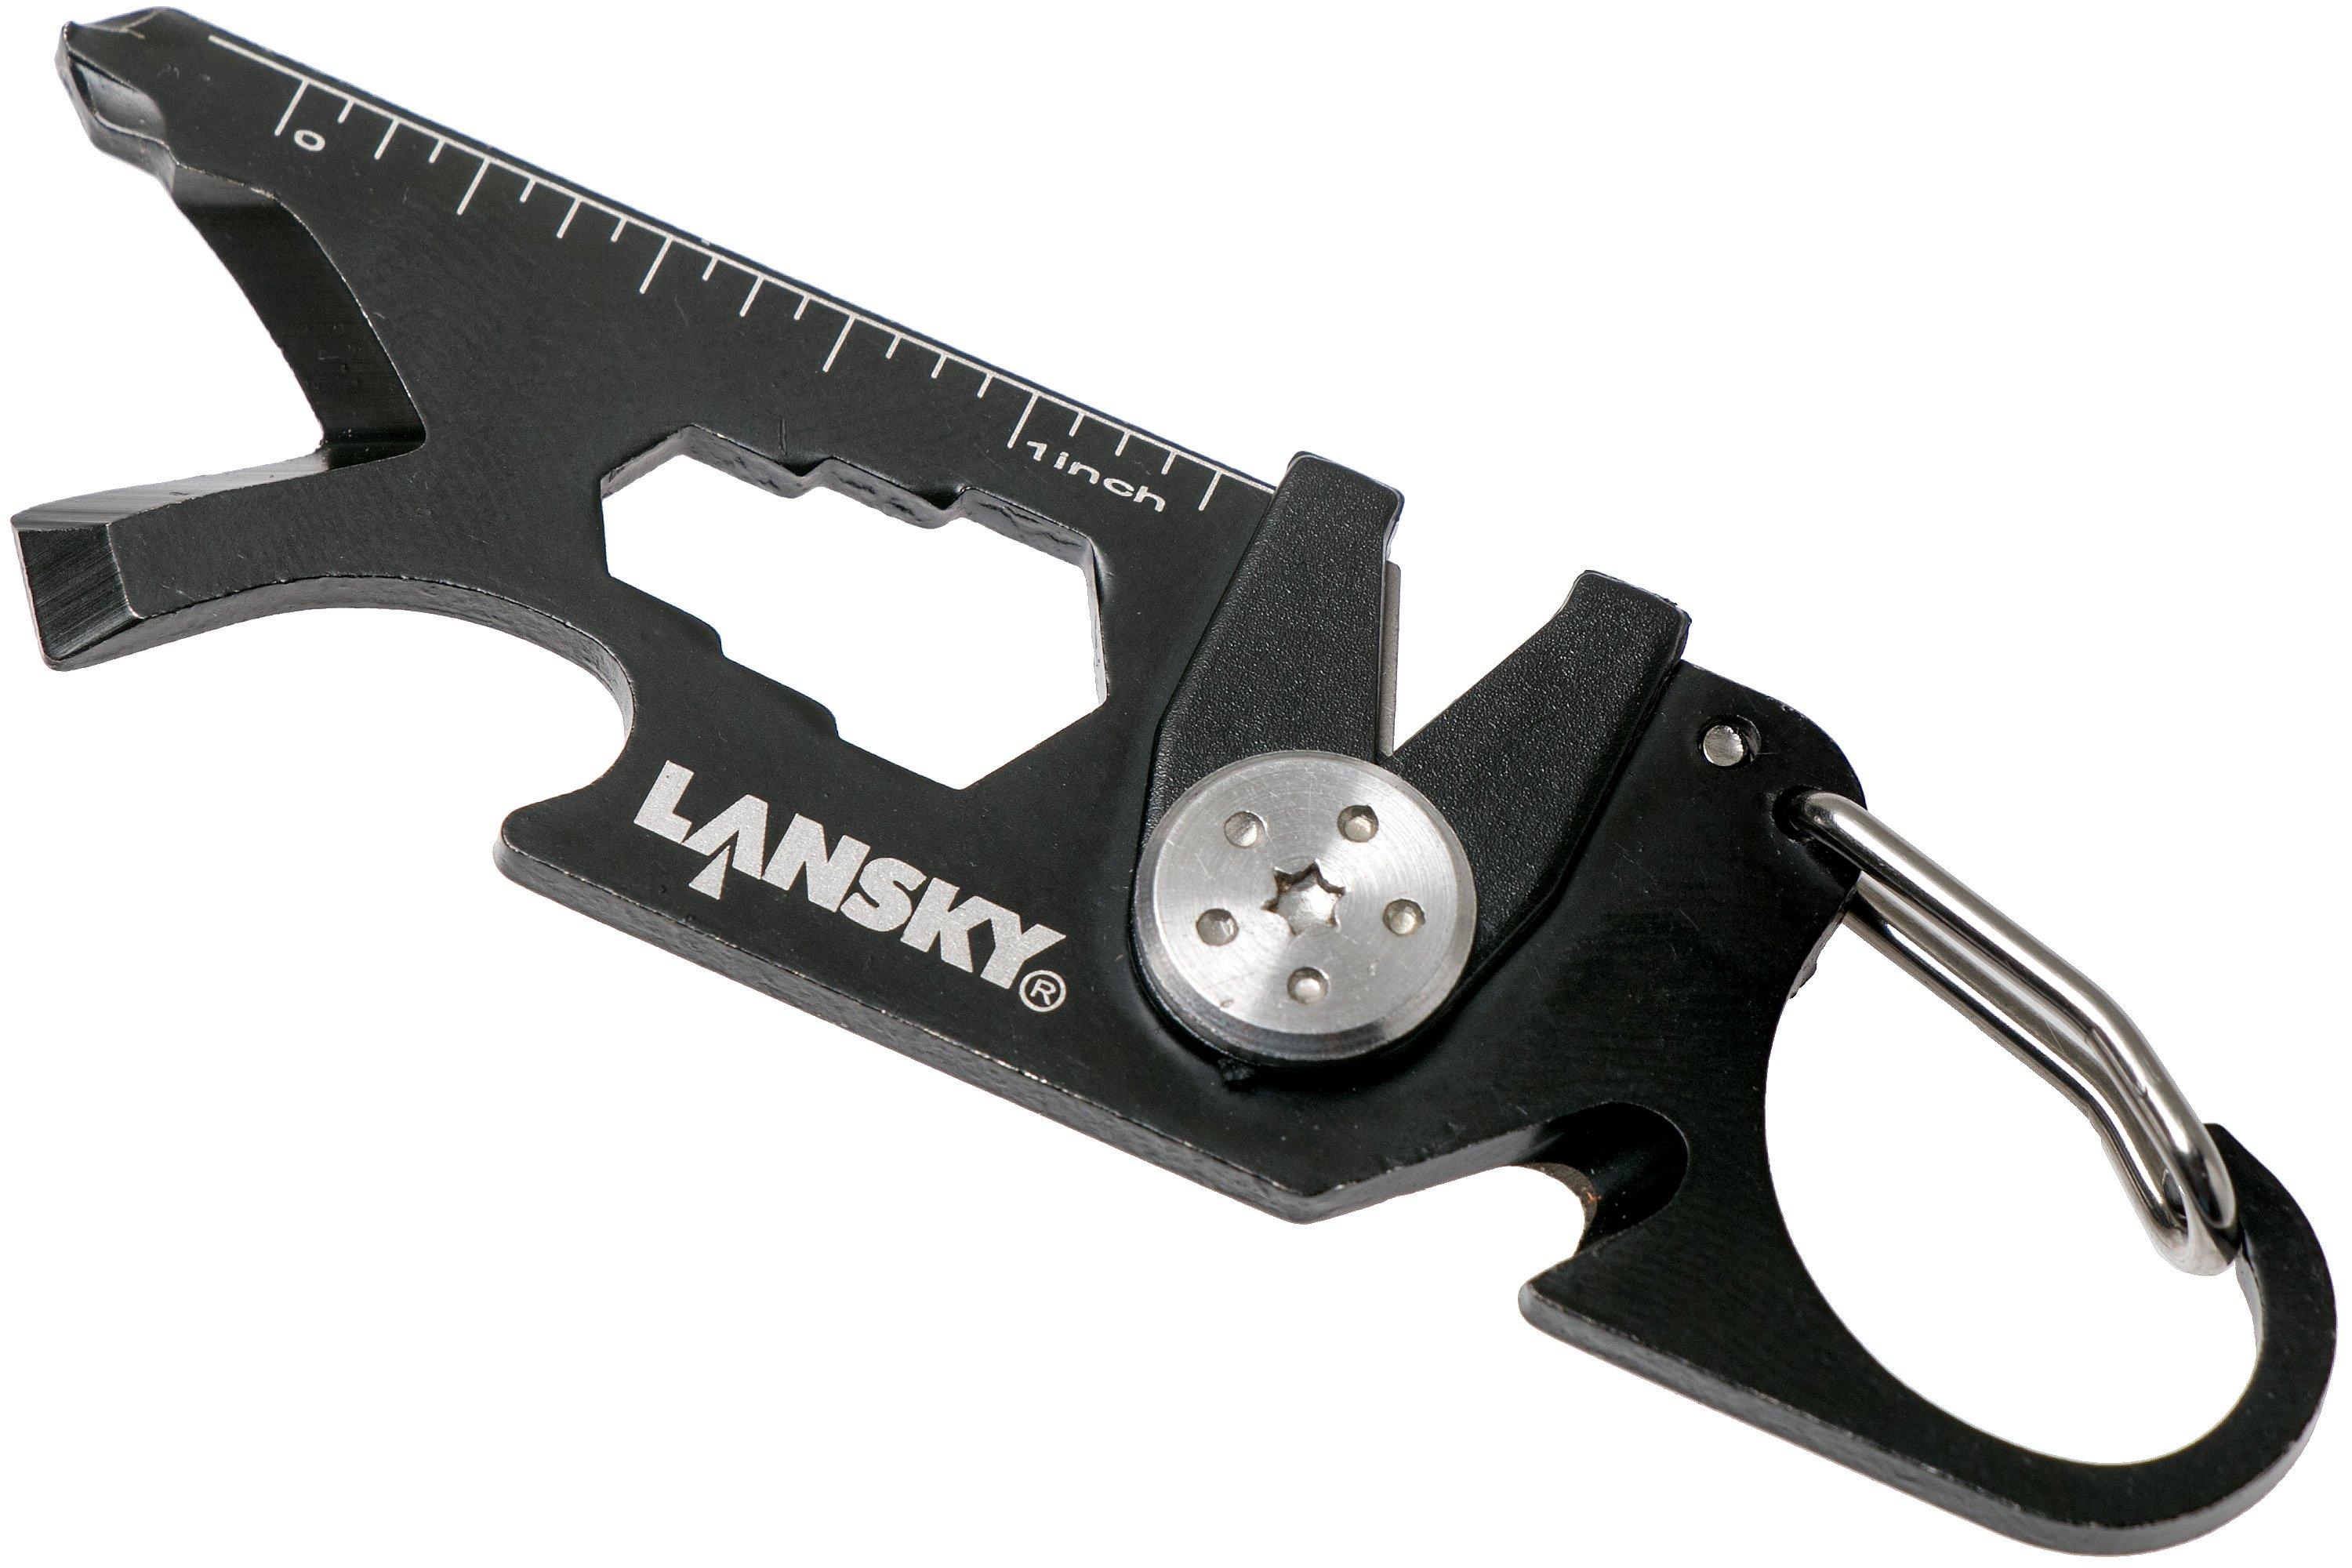 CRKT Knife Sharpener Key Ring with Multi-Tool